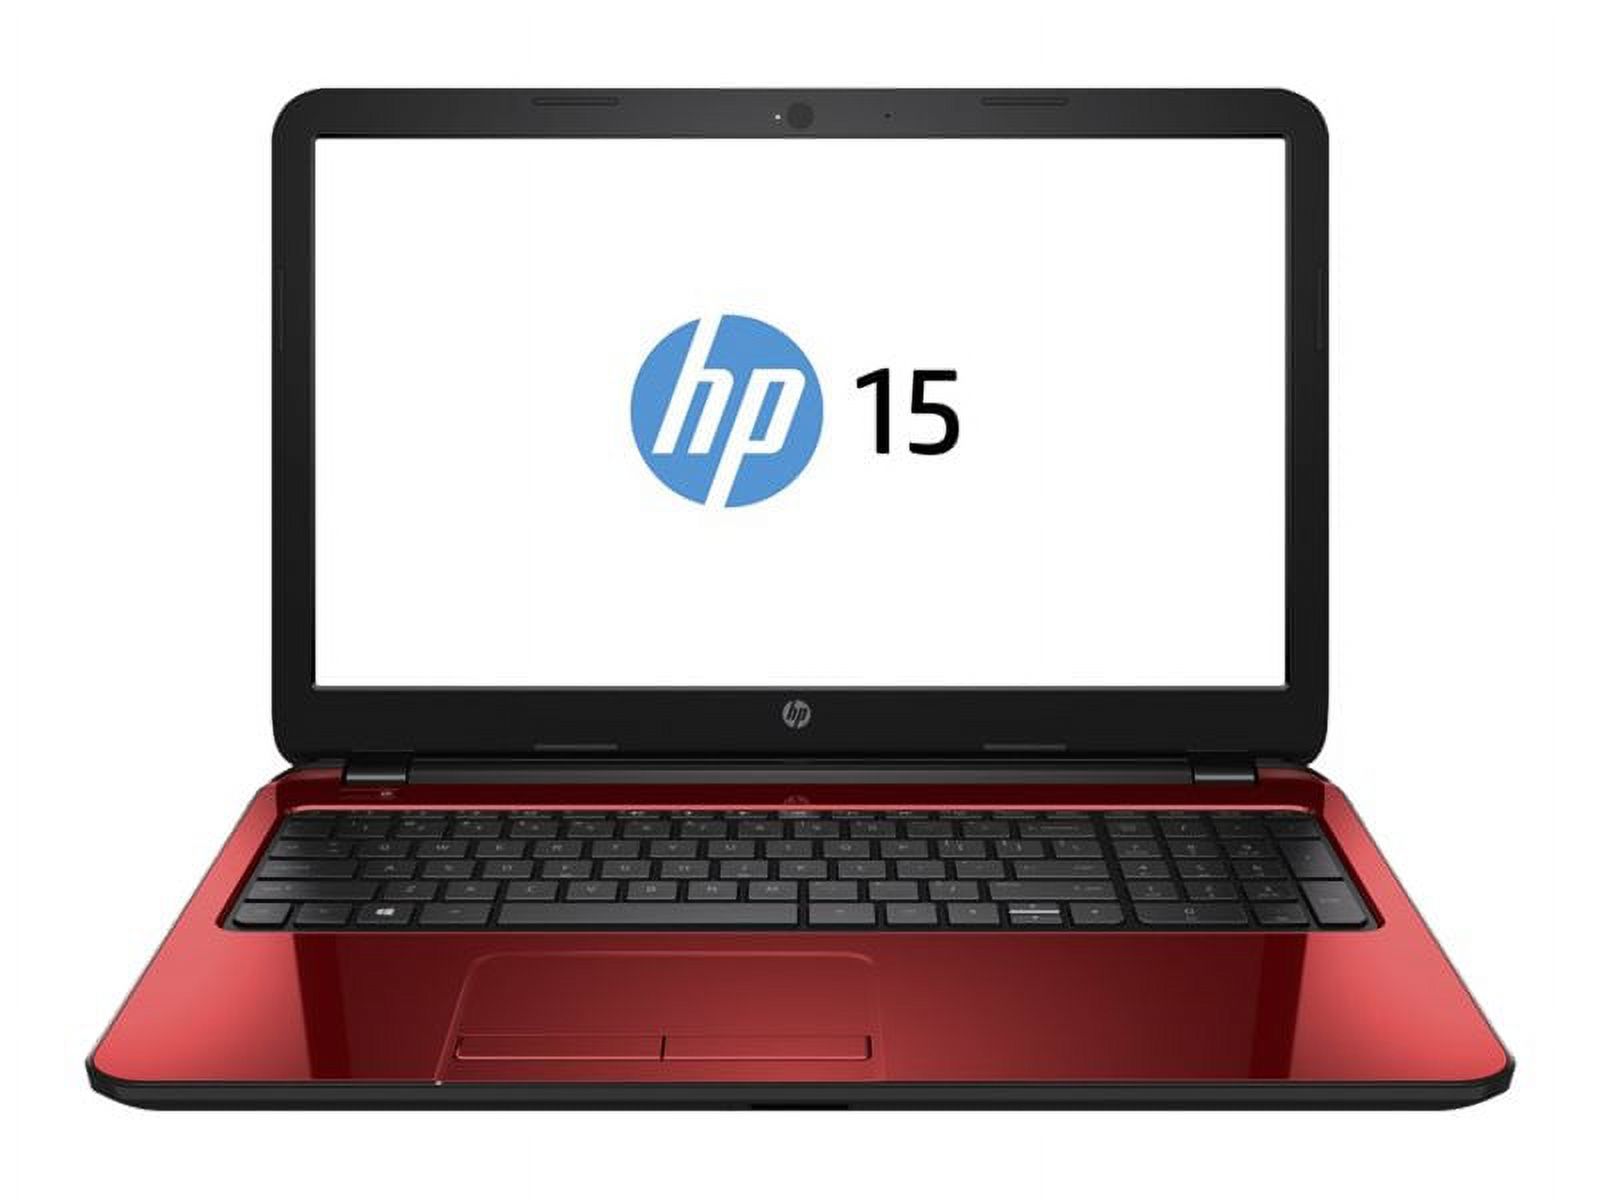 HP Laptop 15-R132wm - Intel Pentium N3540 / 2.16 GHz - Win 8.1 64-bit - HD Graphics - 4 GB RAM - 500 GB HDD - DVD SuperMulti - 15.6" 1366 x 768 (HD) - flyer red - image 5 of 7